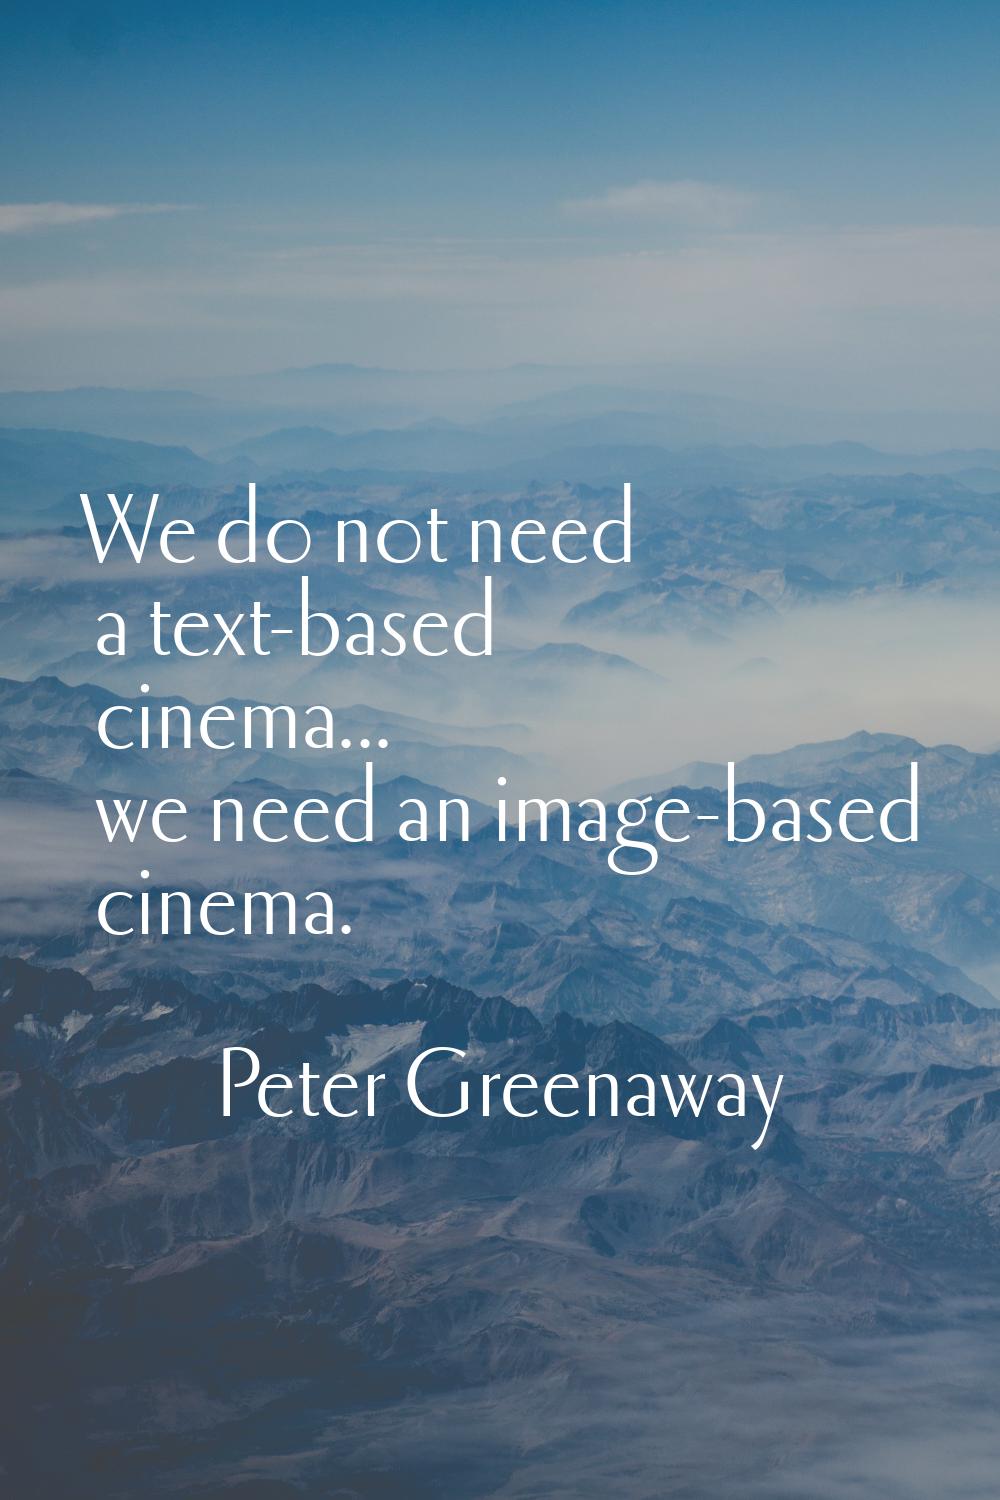 We do not need a text-based cinema... we need an image-based cinema.